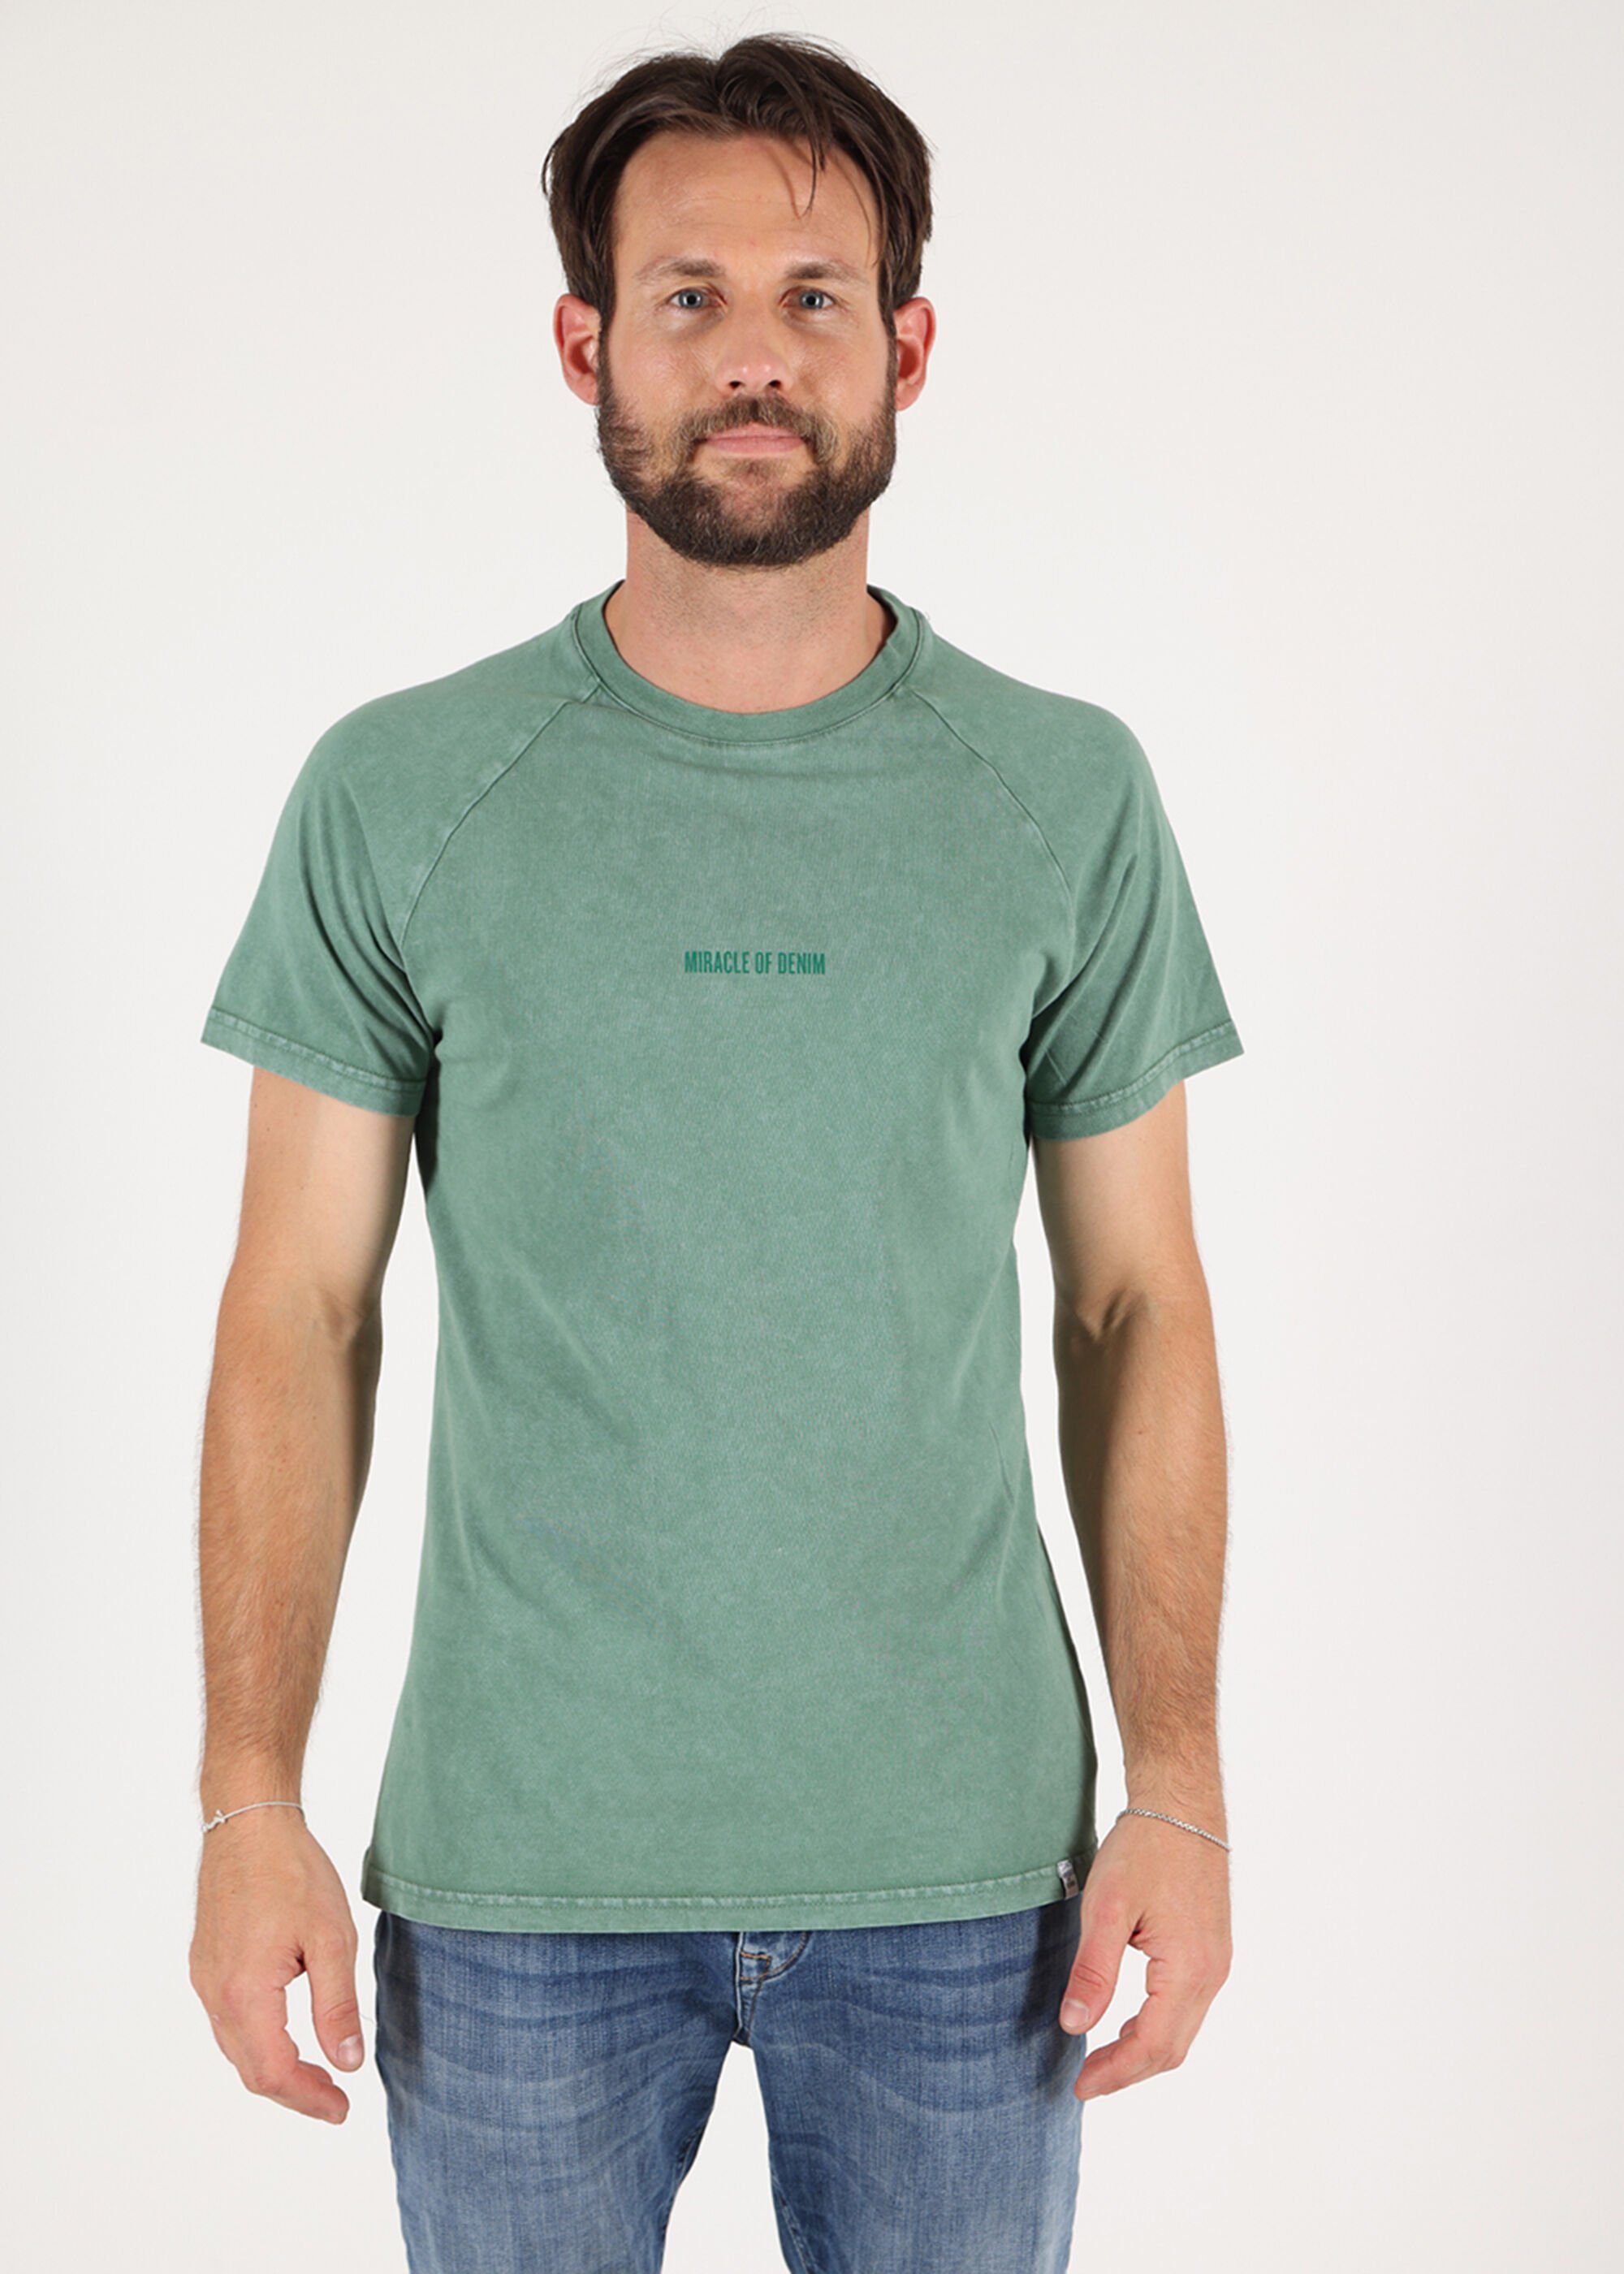 T-Shirt Froggy Denim of unifarbenen Design Green Miracle im